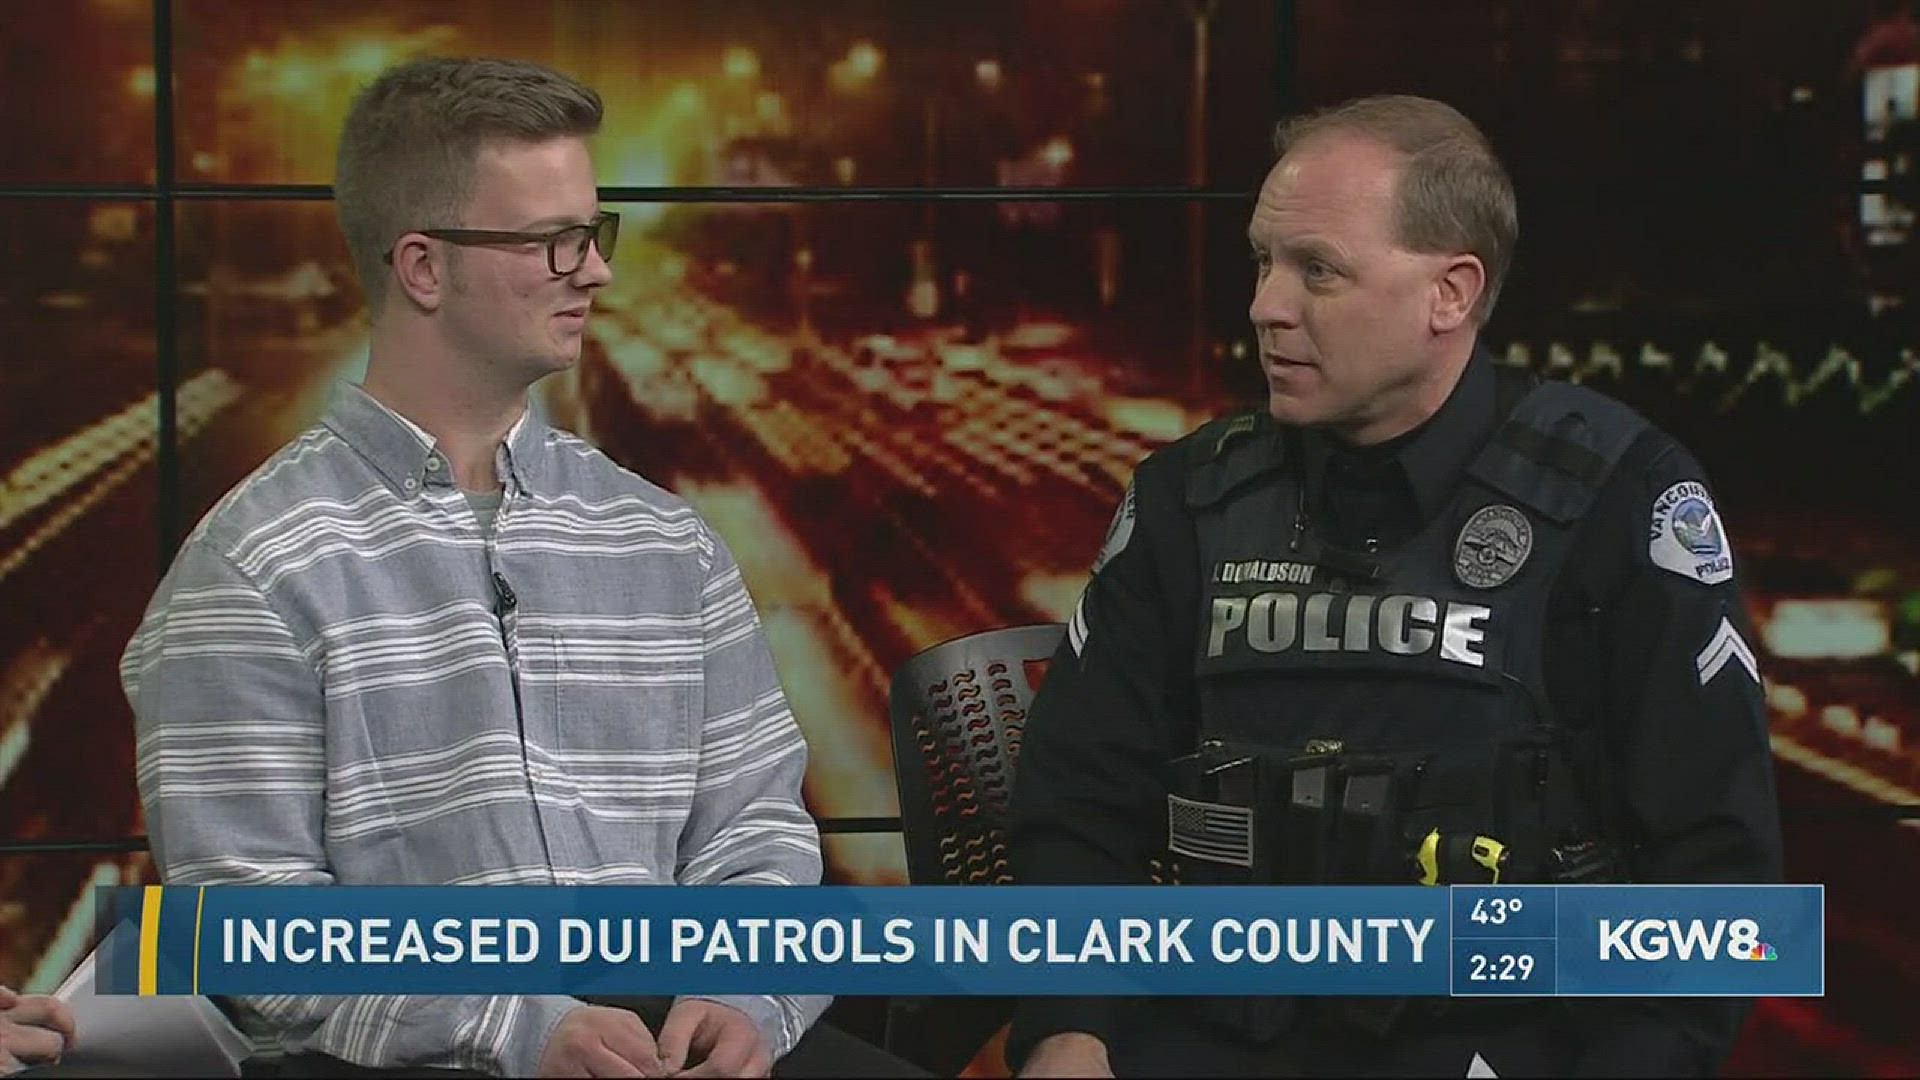 Increased DUI patrols in Clark County